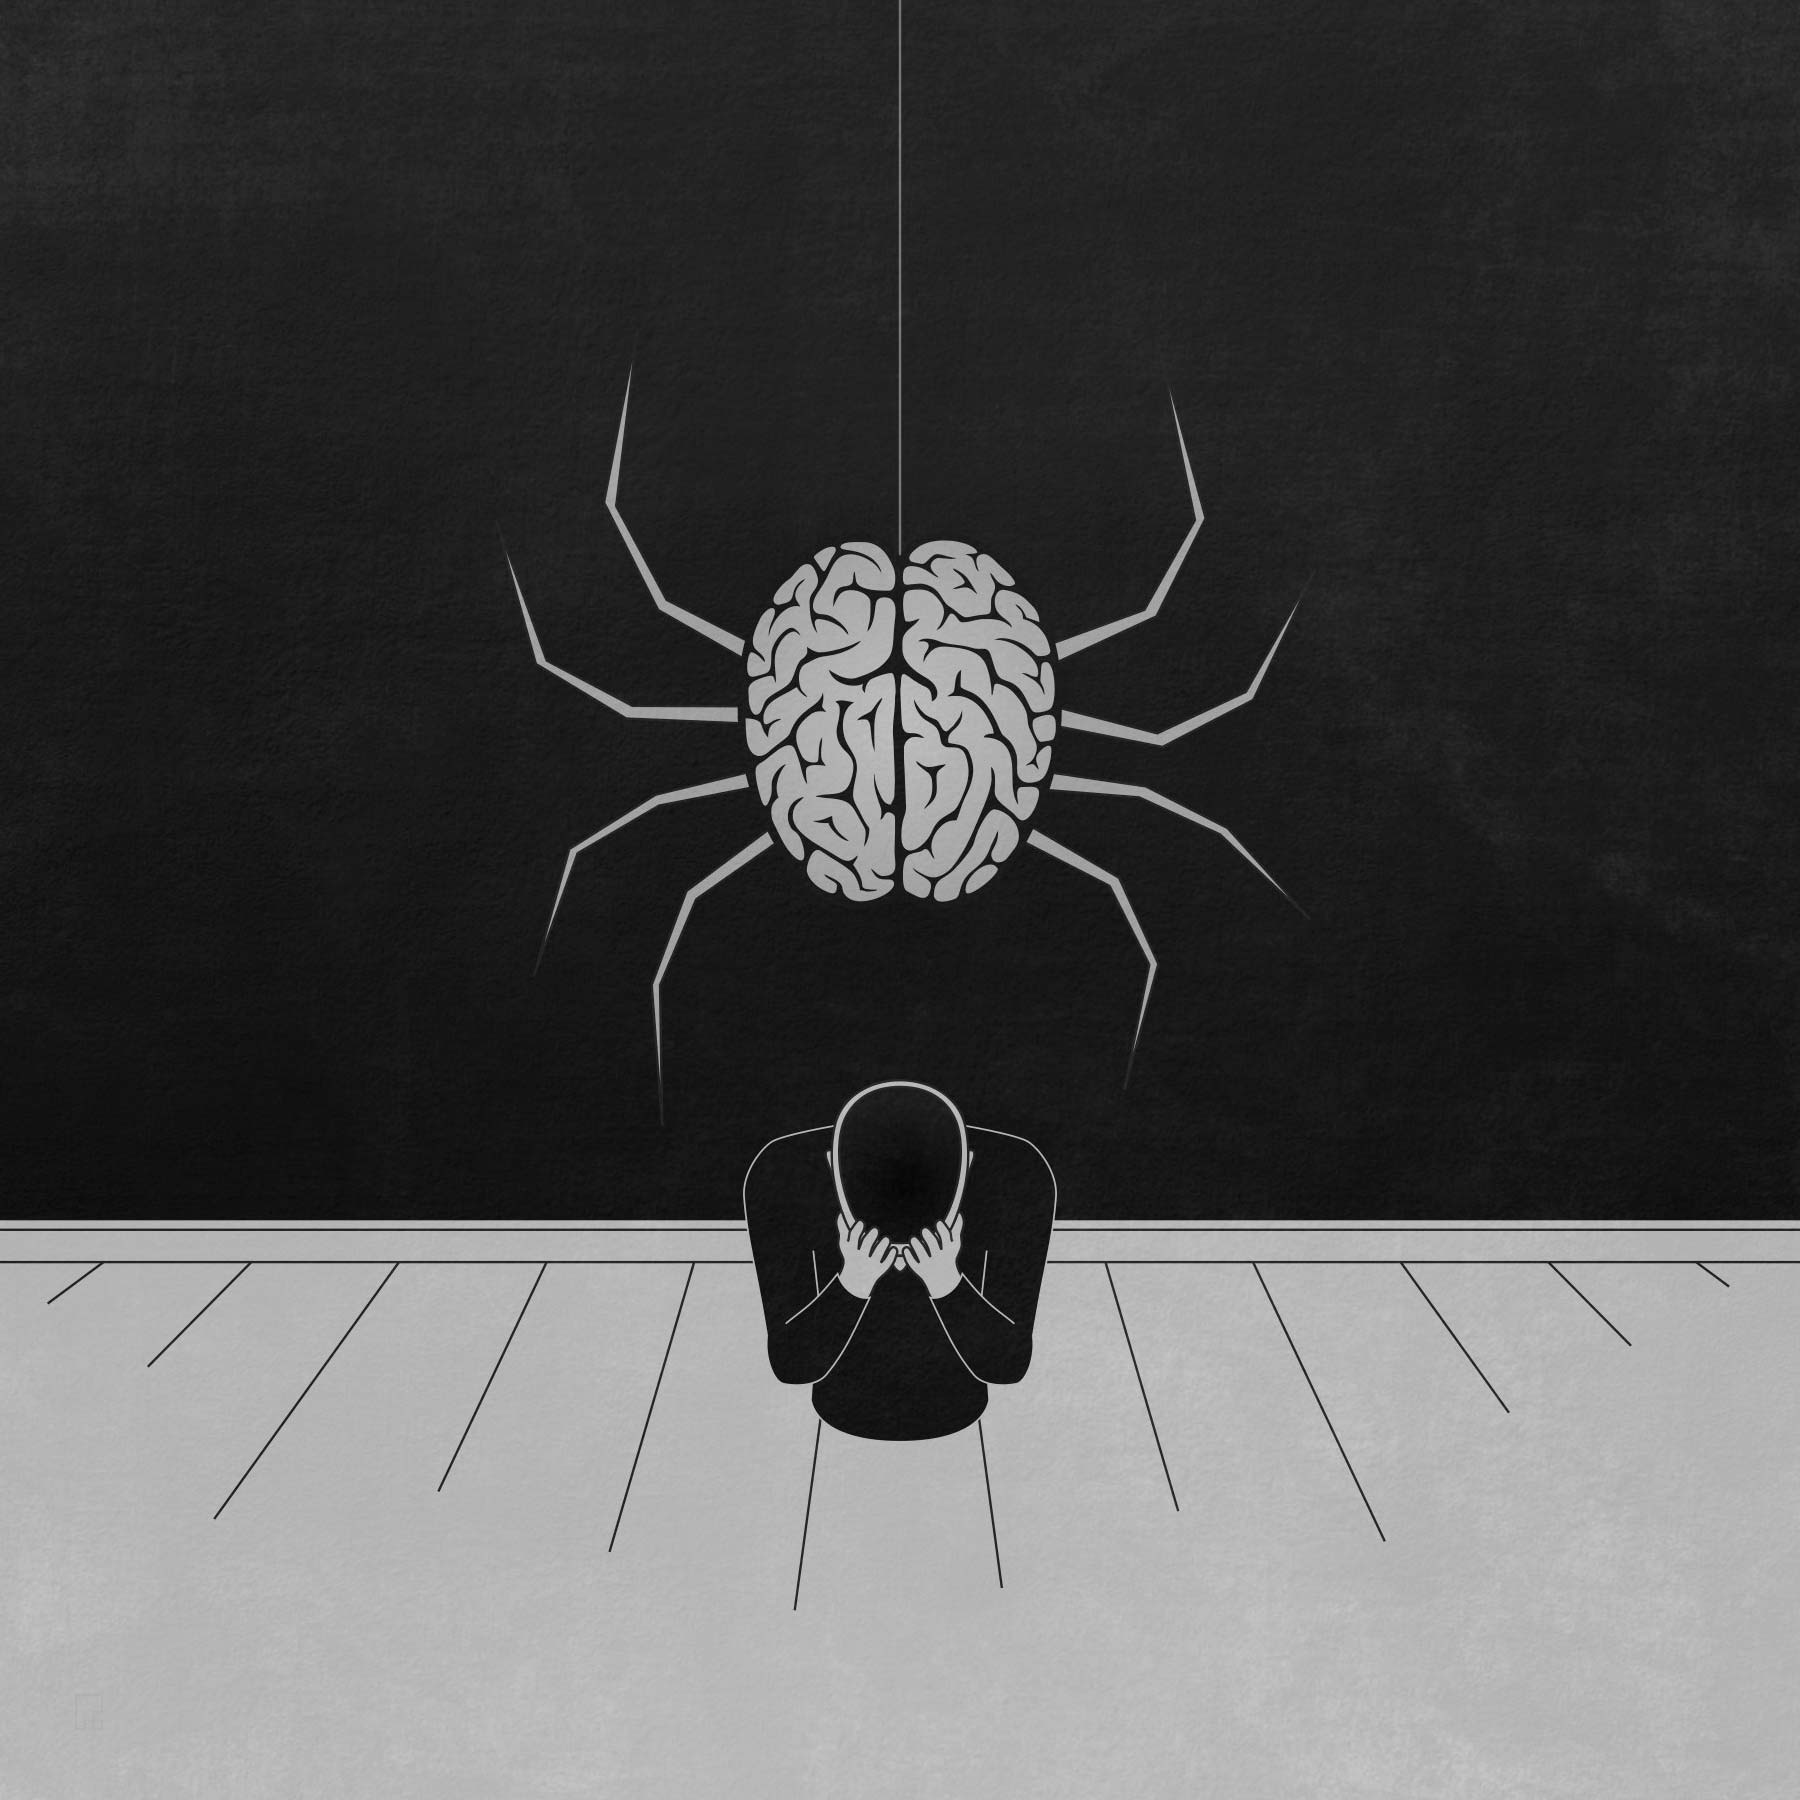 roto ilustracion araña cerebro - javier real